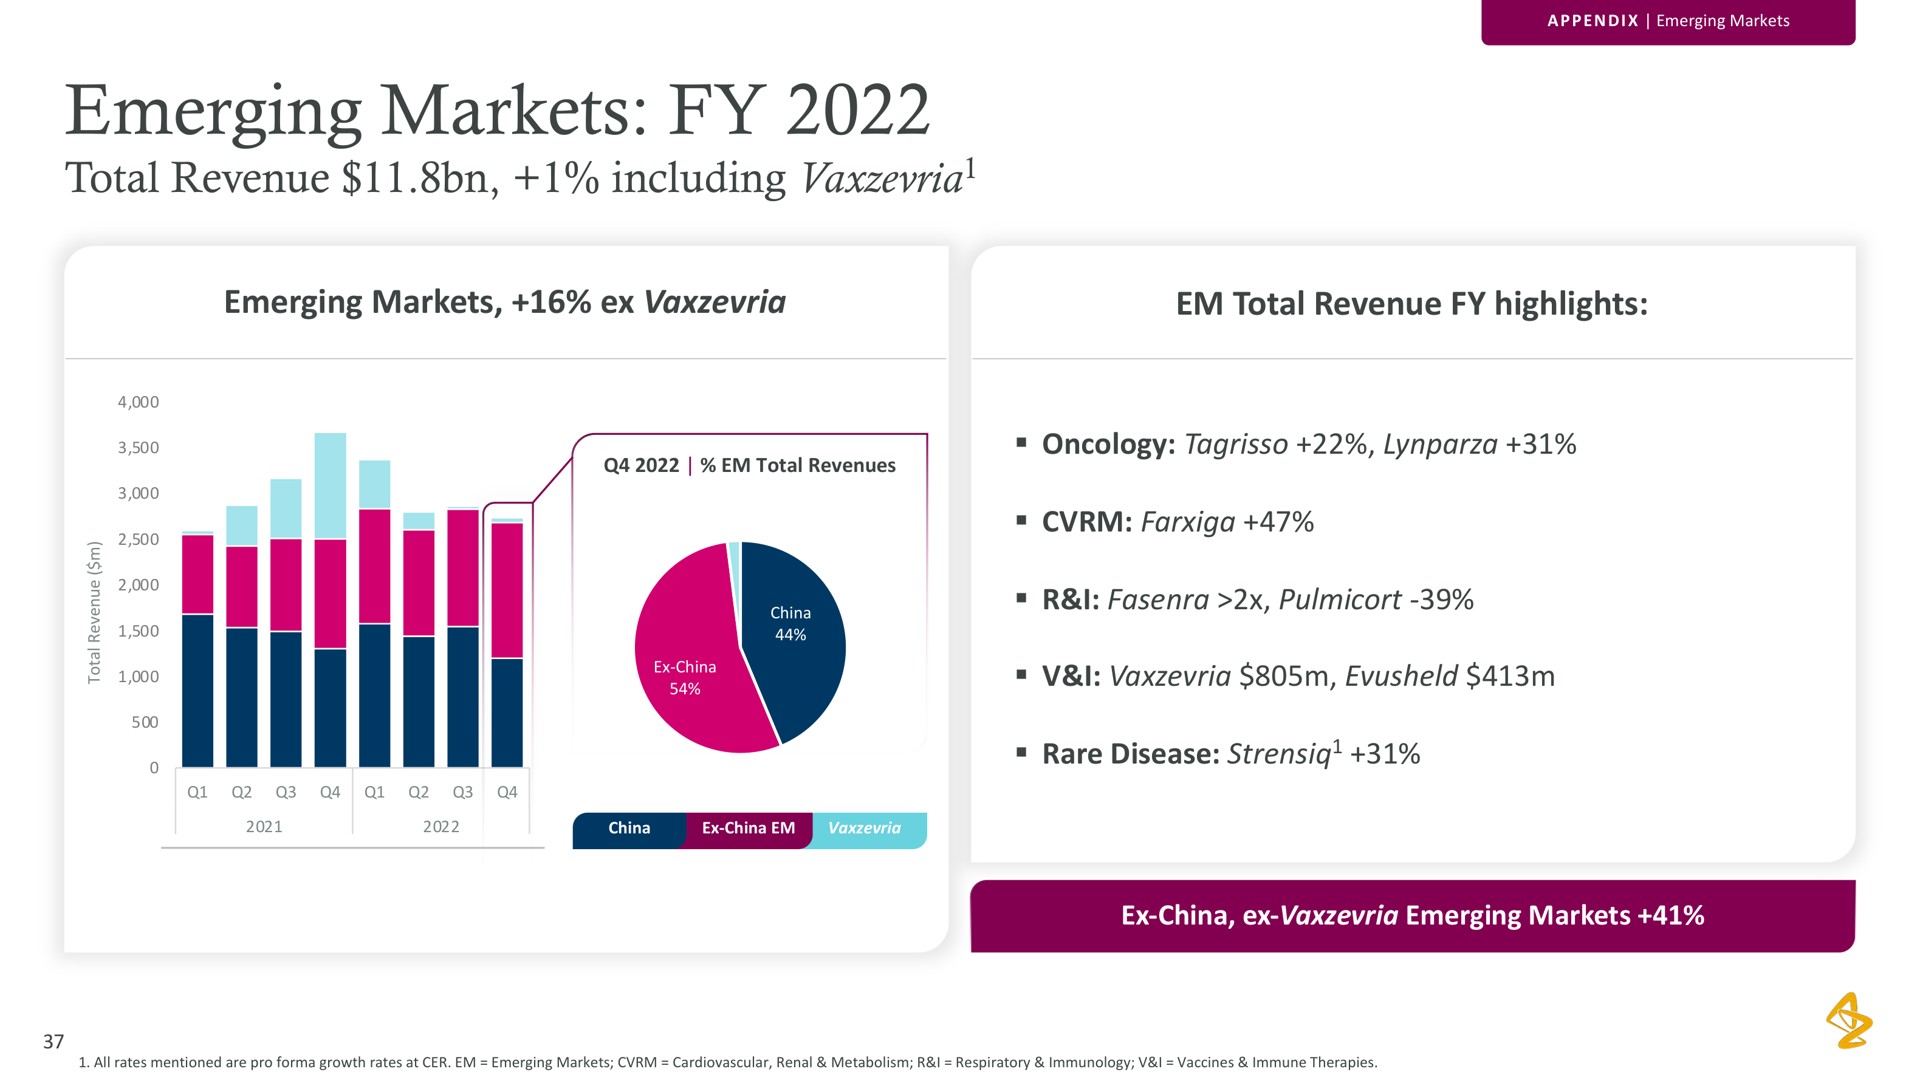 emerging markets total revenue including emerging markets total revenue highlights oncology i i rare disease | AstraZeneca